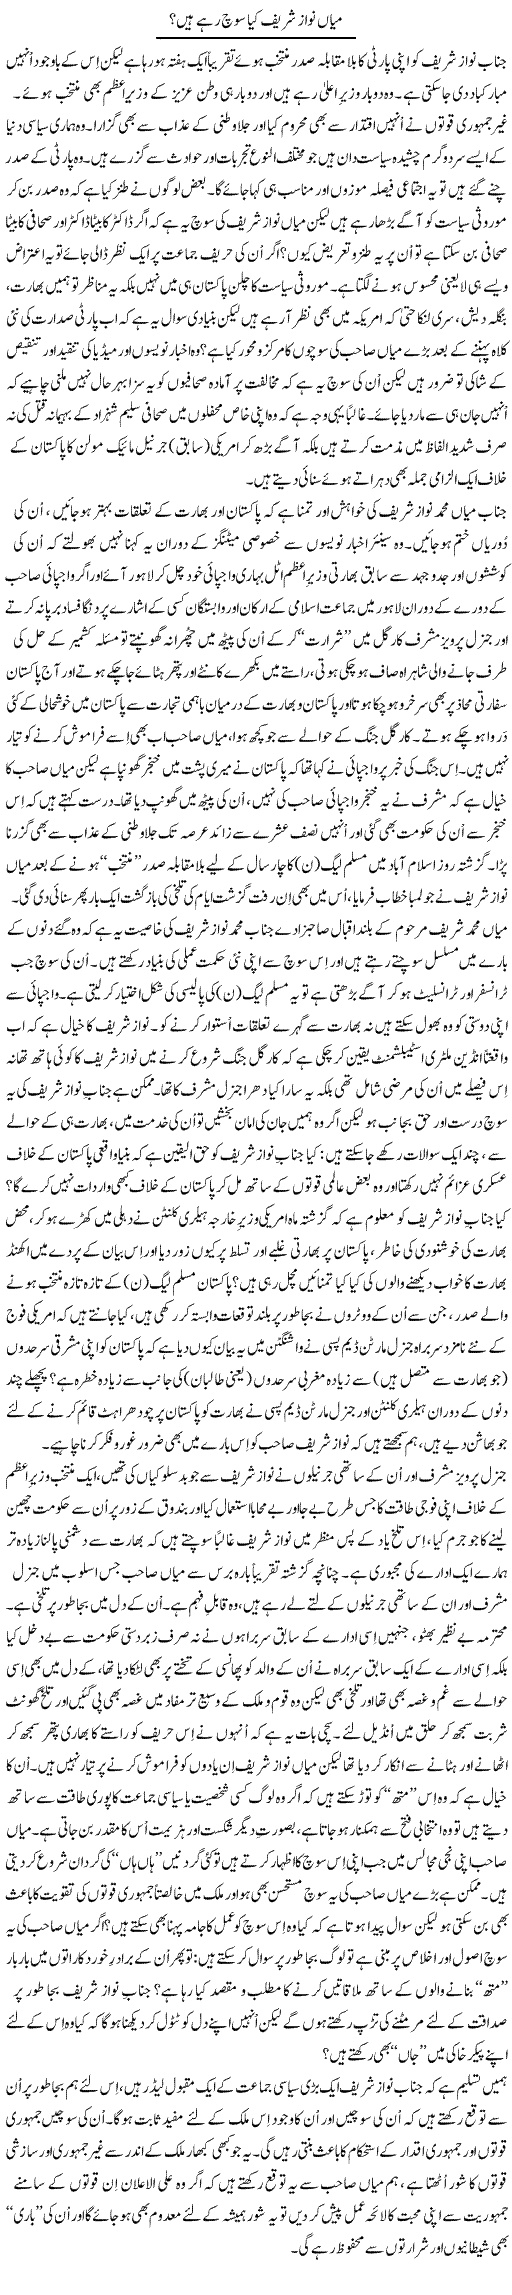 Thinking of Nawaz Sharif Express Column Tanvir Qasir 1 August 2011